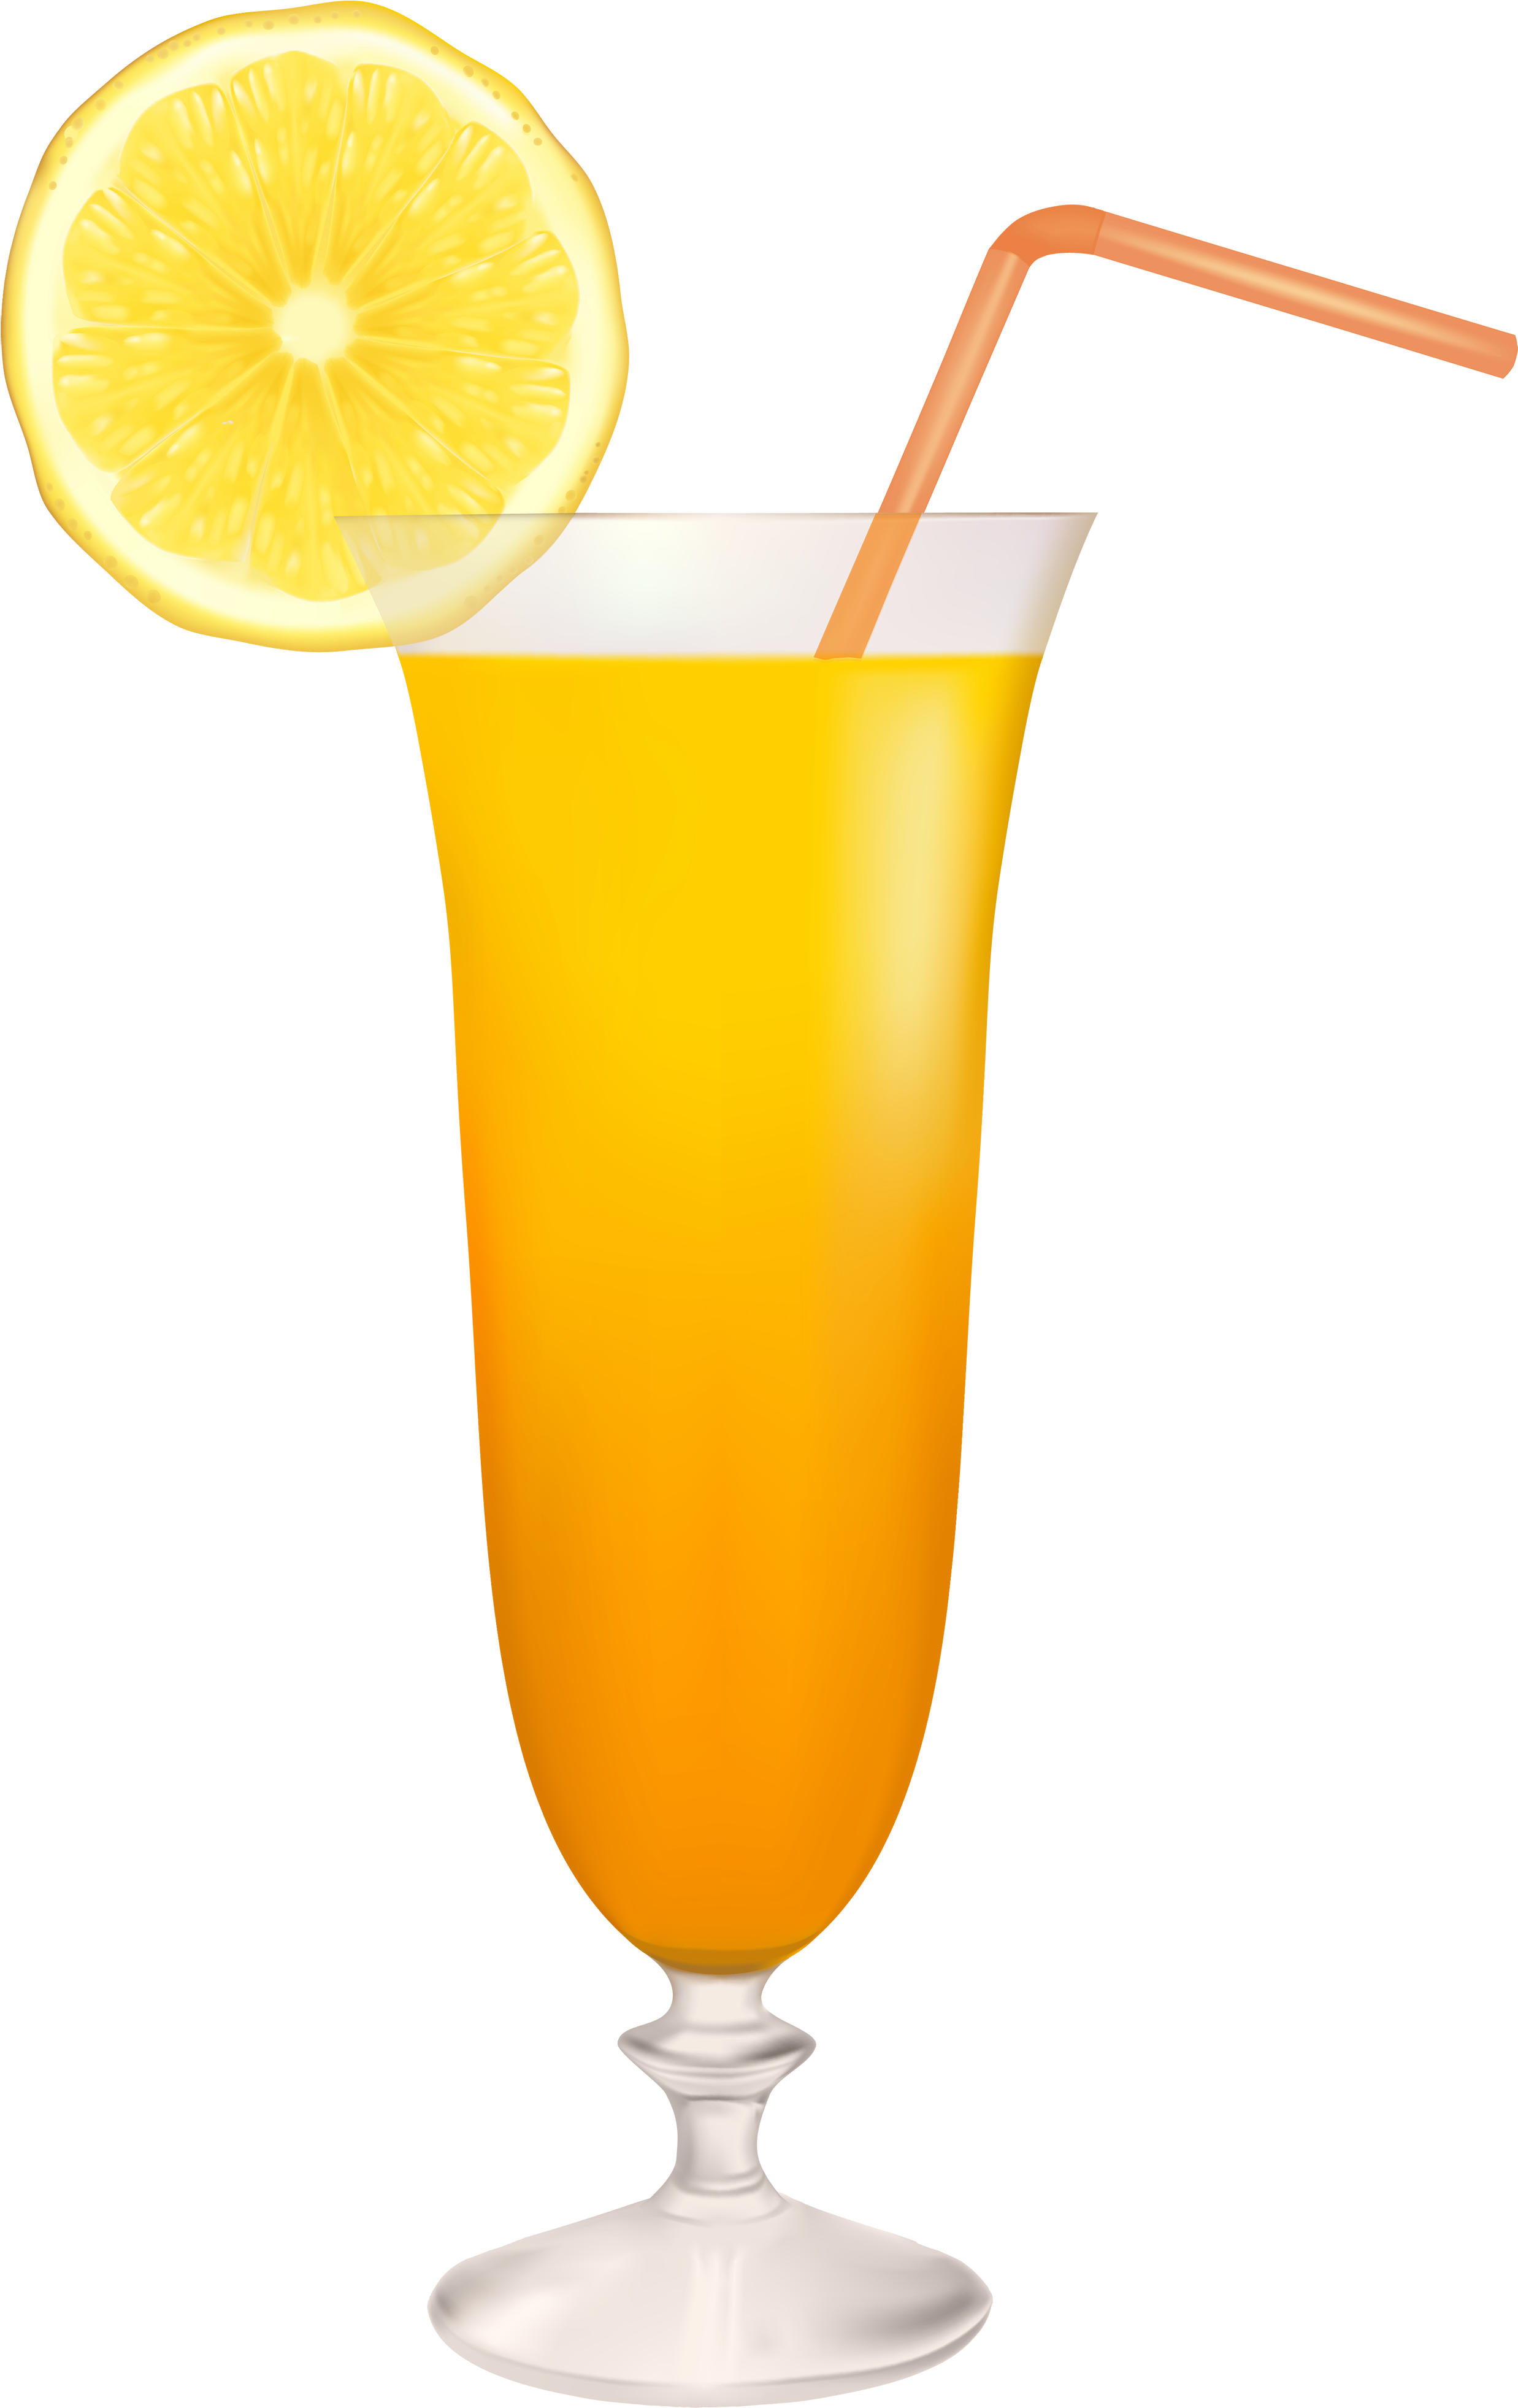 Lemon Slice With Glass (2571x4000)